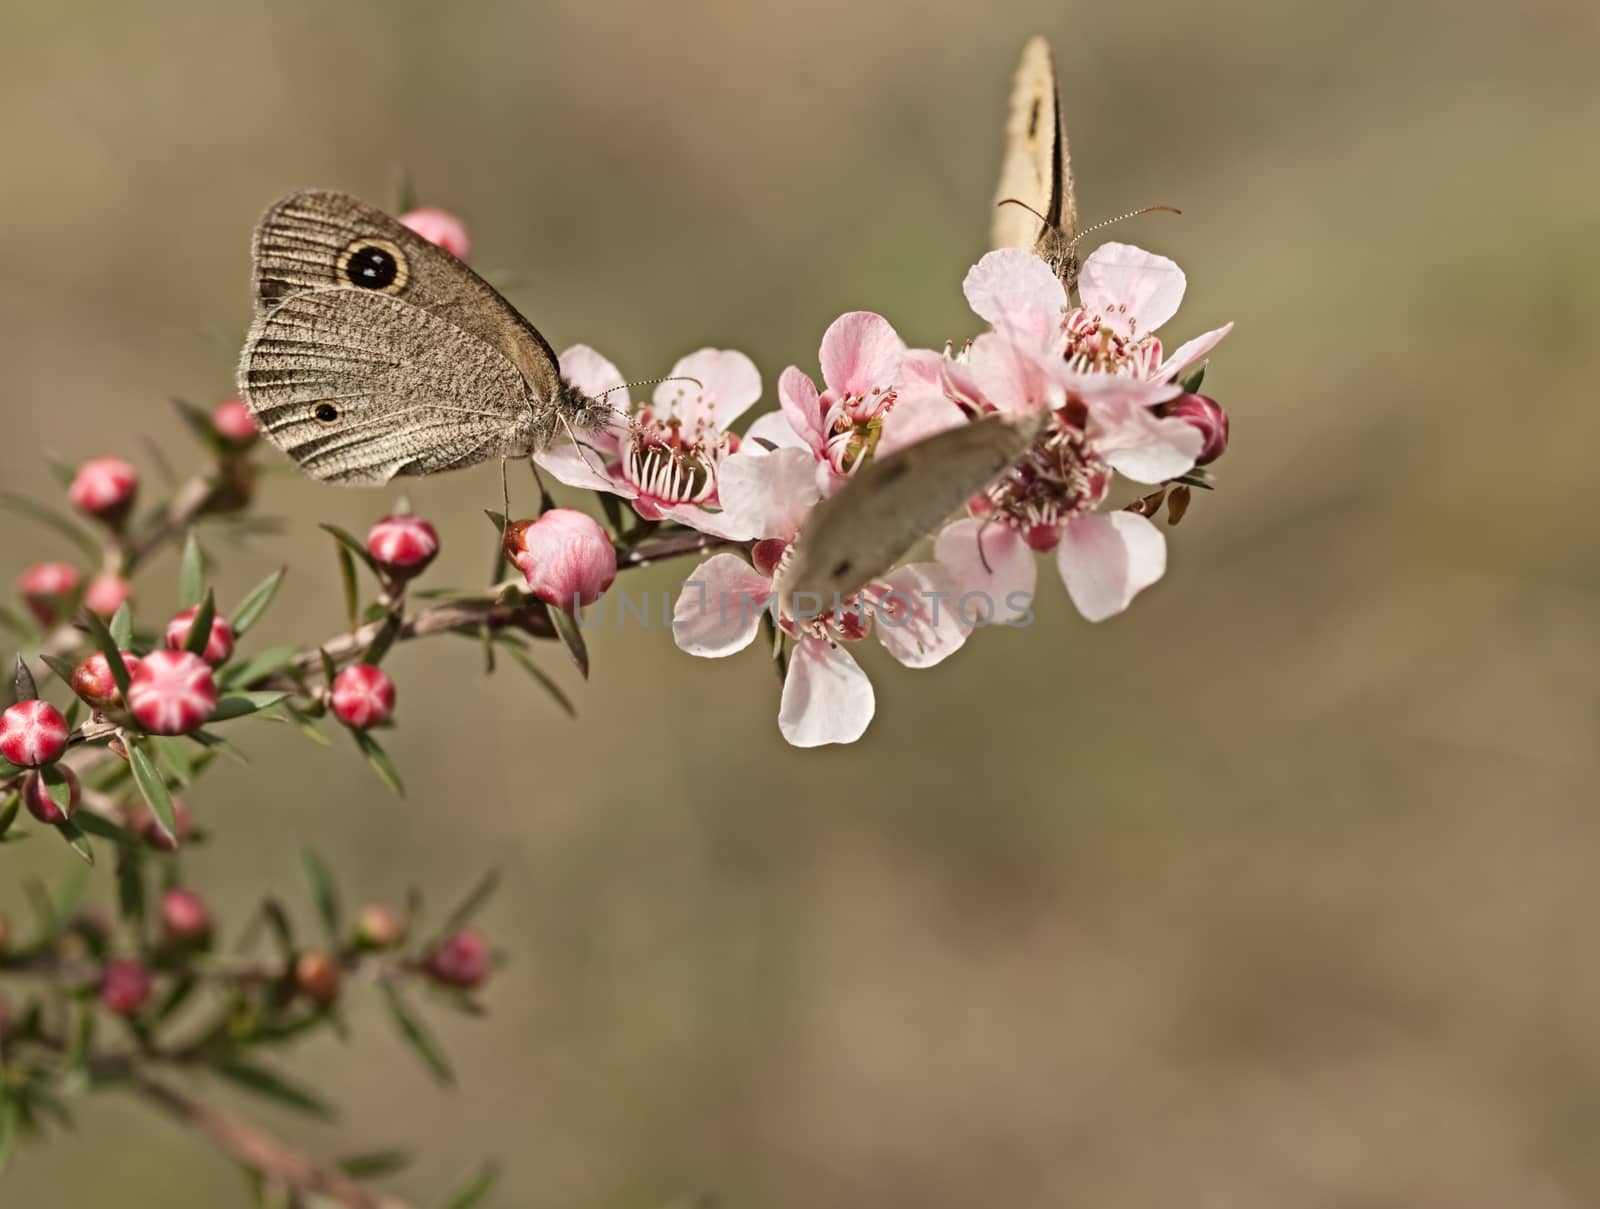 Dingy Ring butterflies on Australian leptospernum flowers by sherj